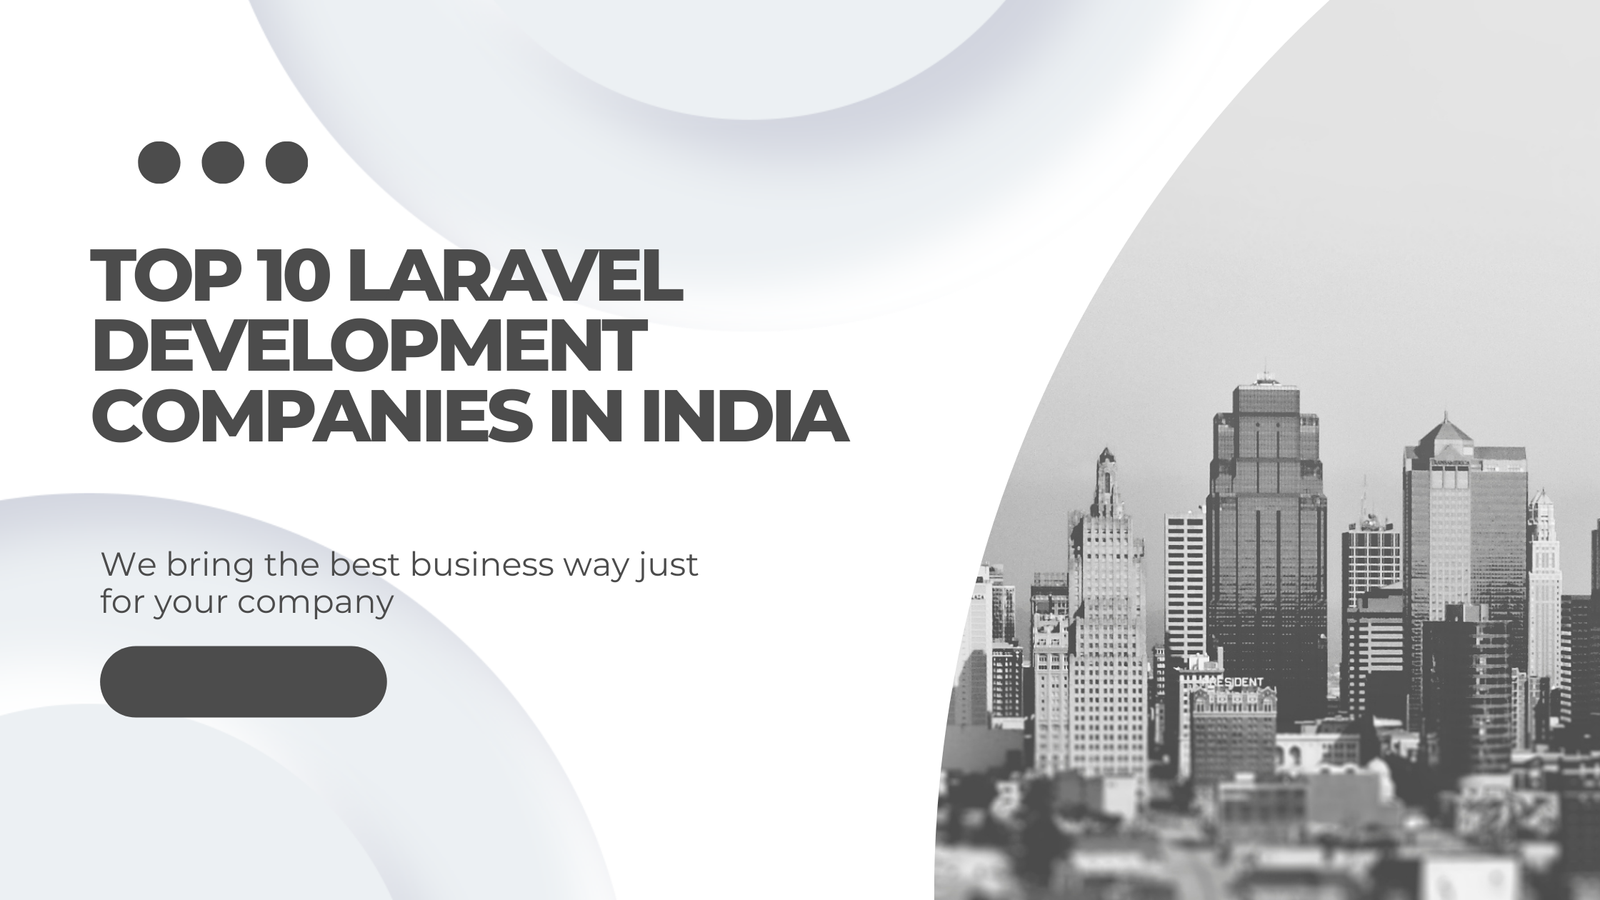 laravel development company in india